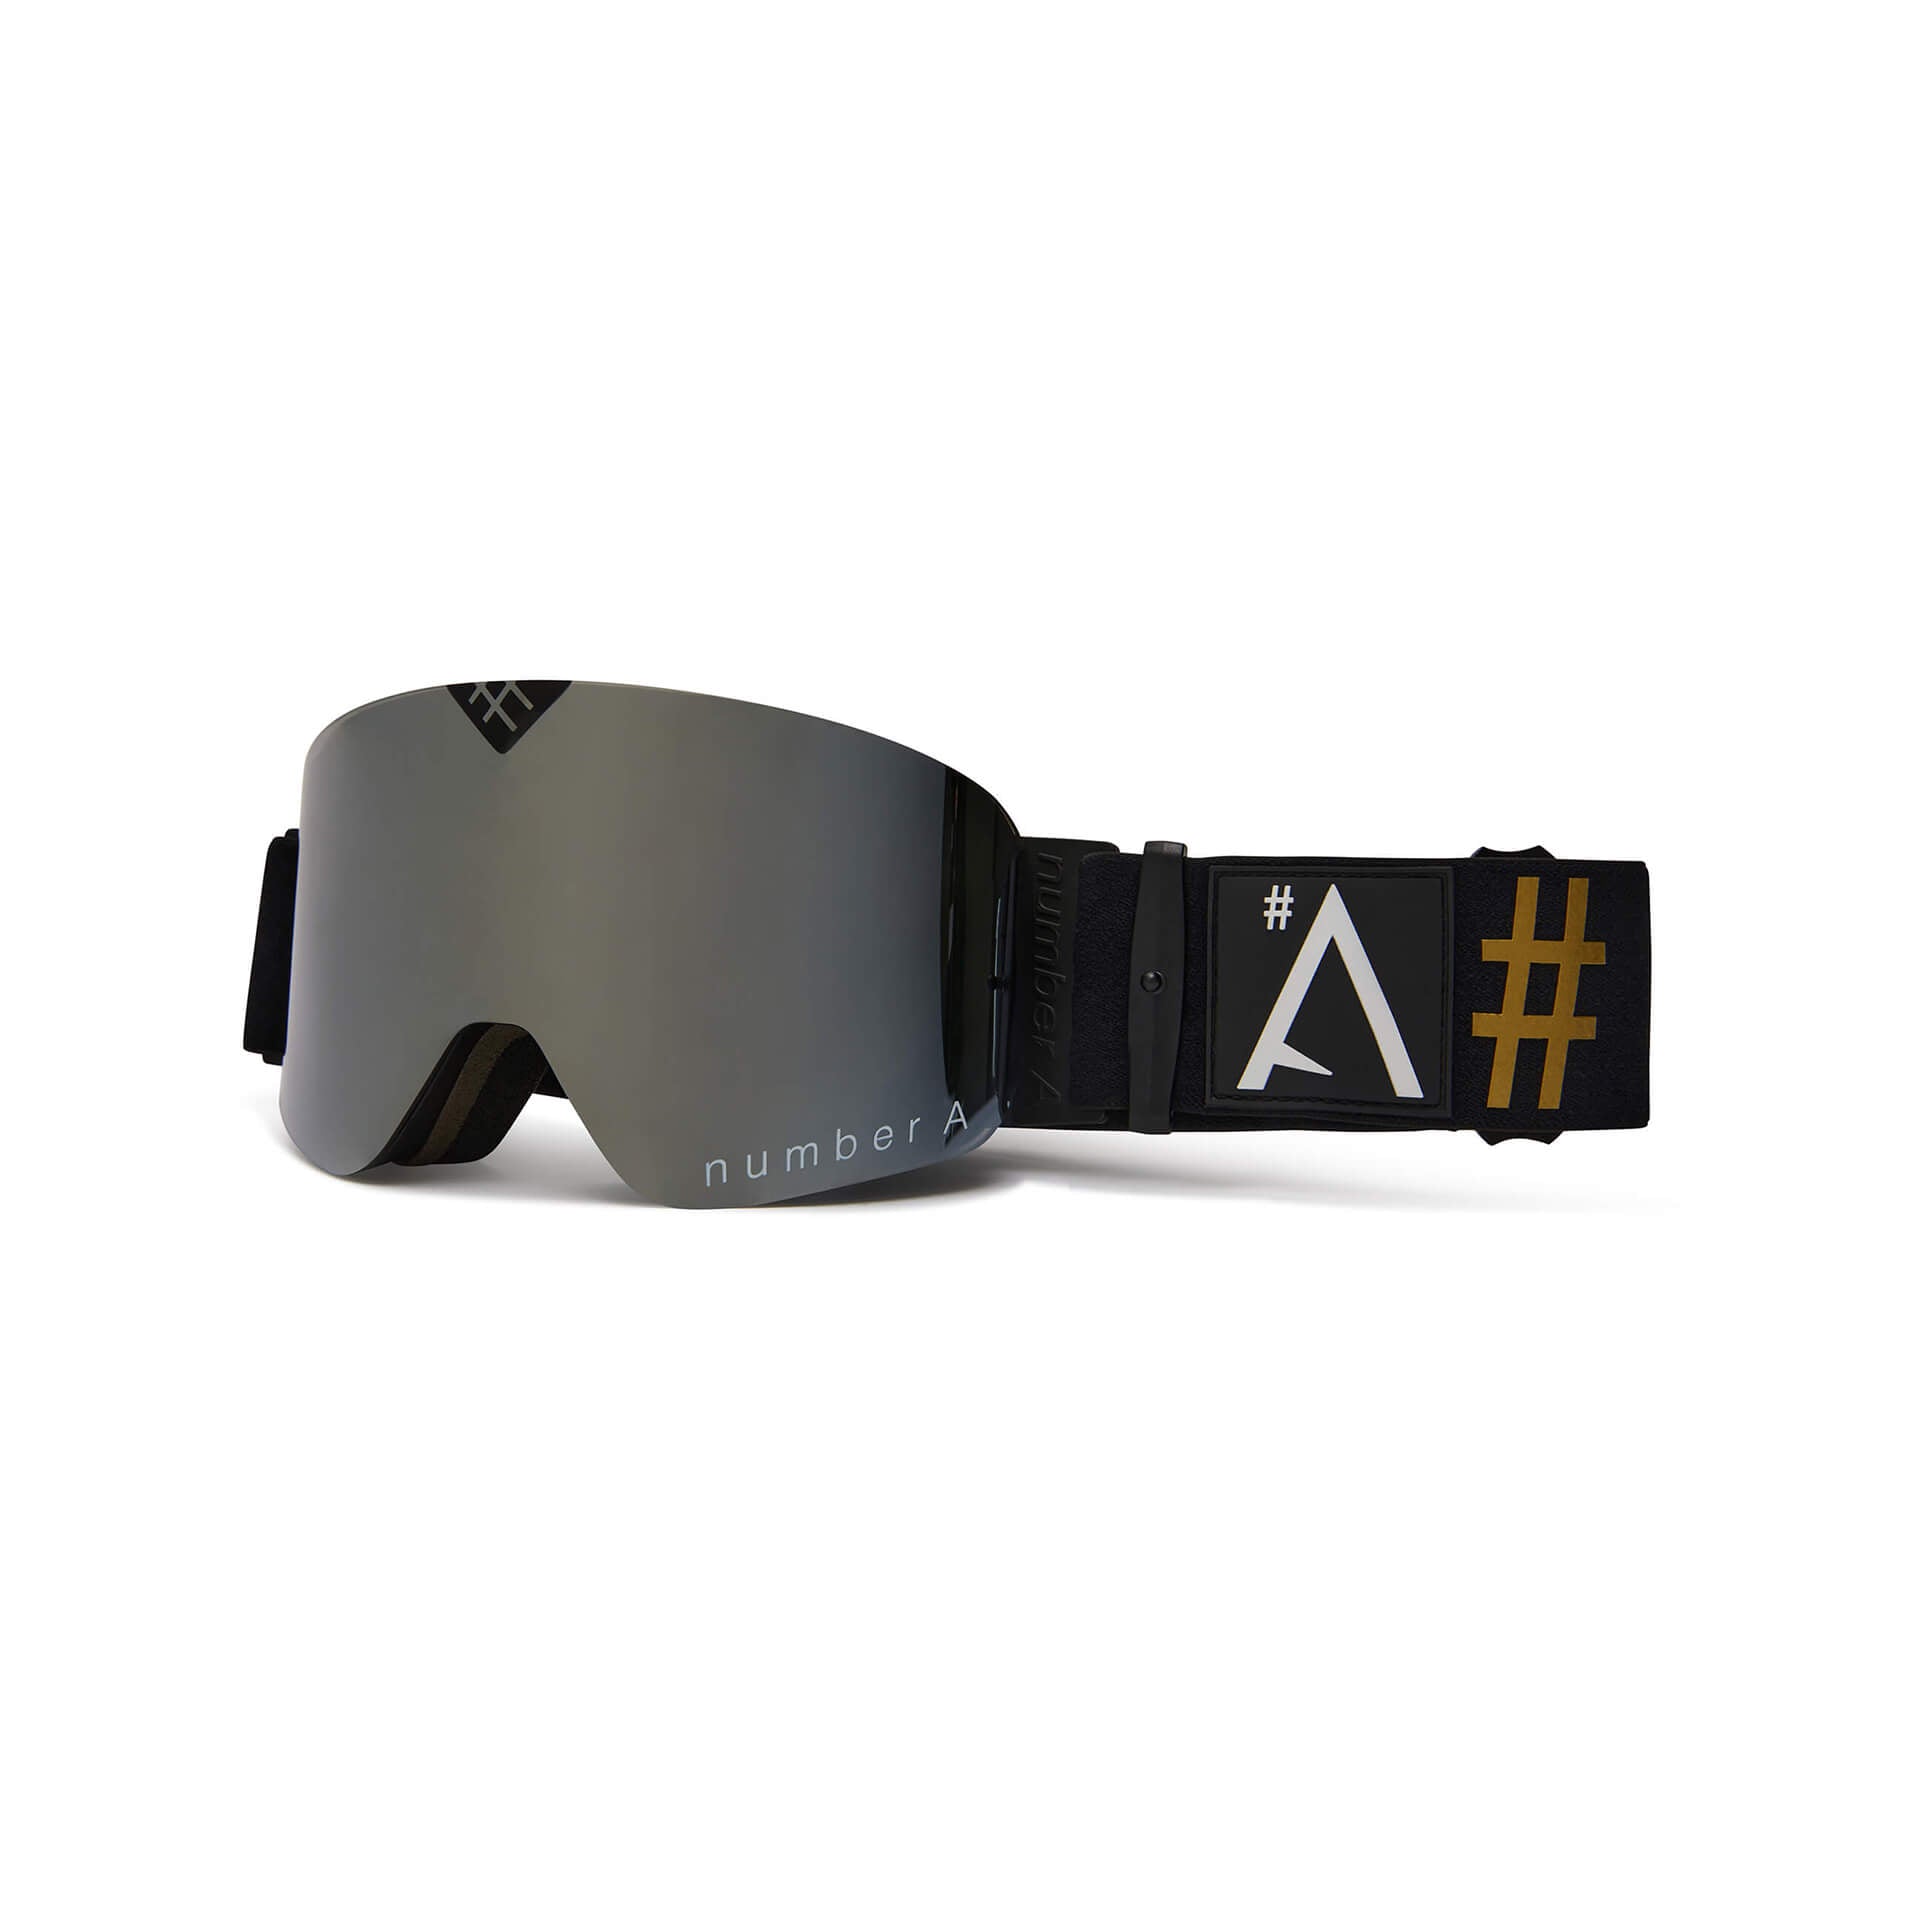 Number A Stato Goggles silver mirror lens black &amp; gold strap cycling eyewear mtb biking goggles